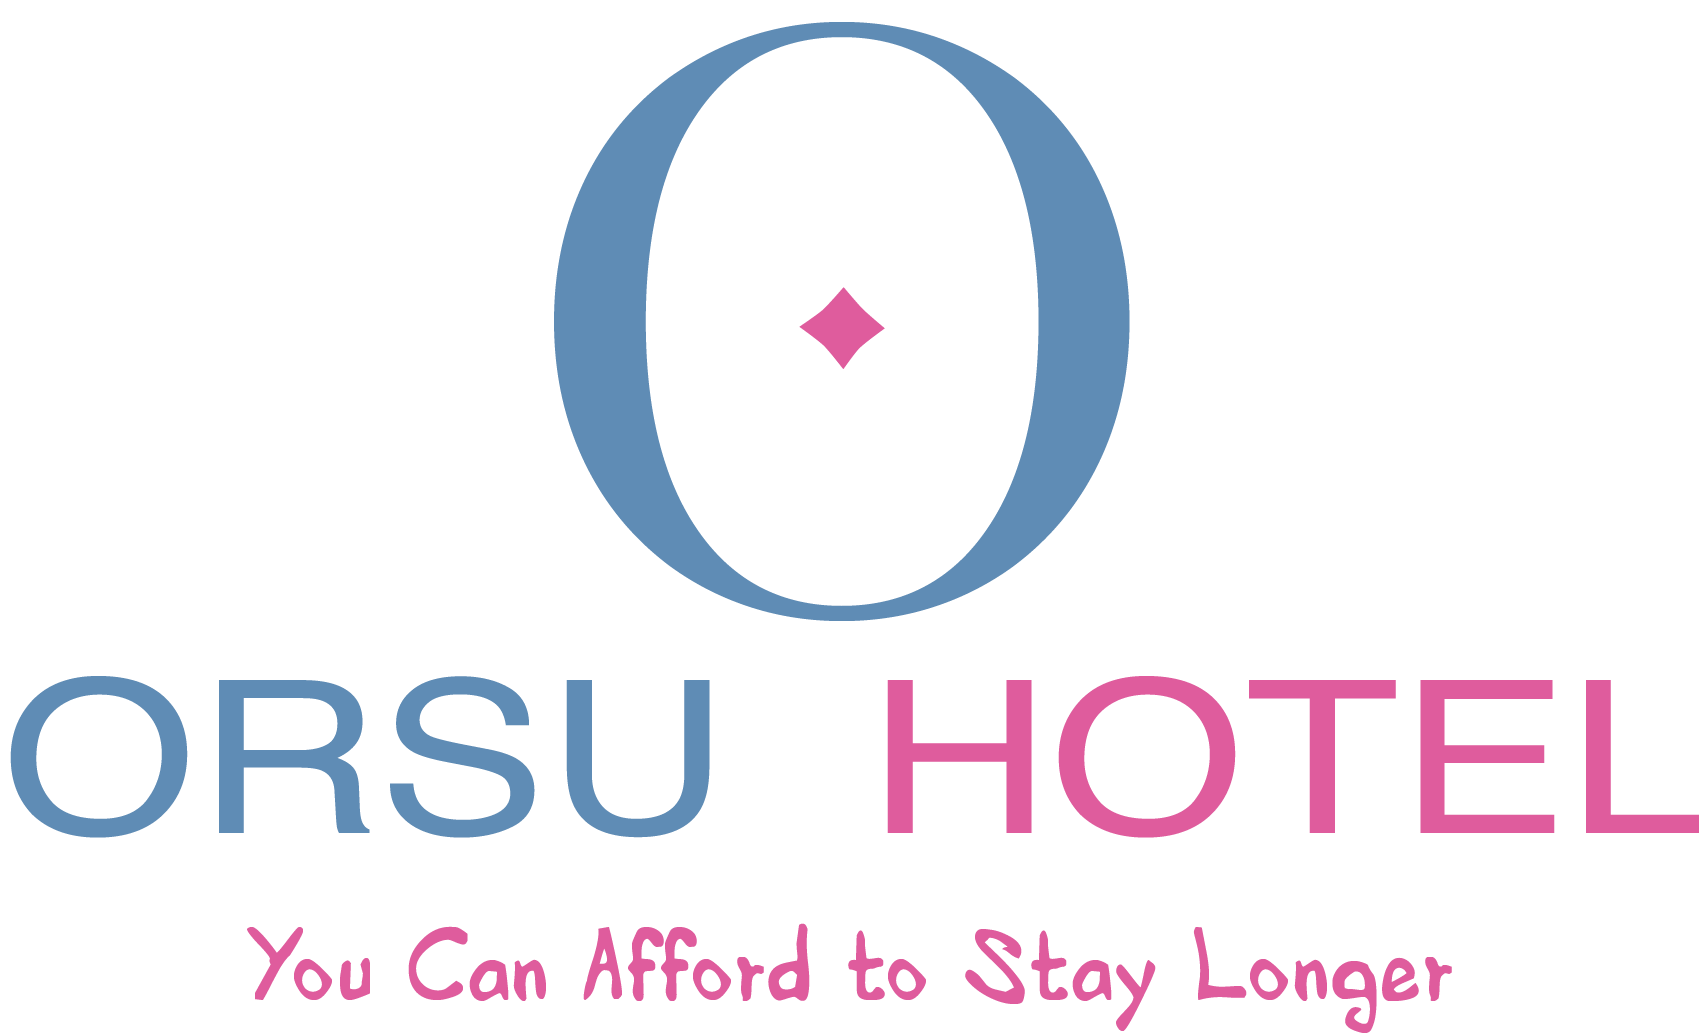 The ORSU Hotel